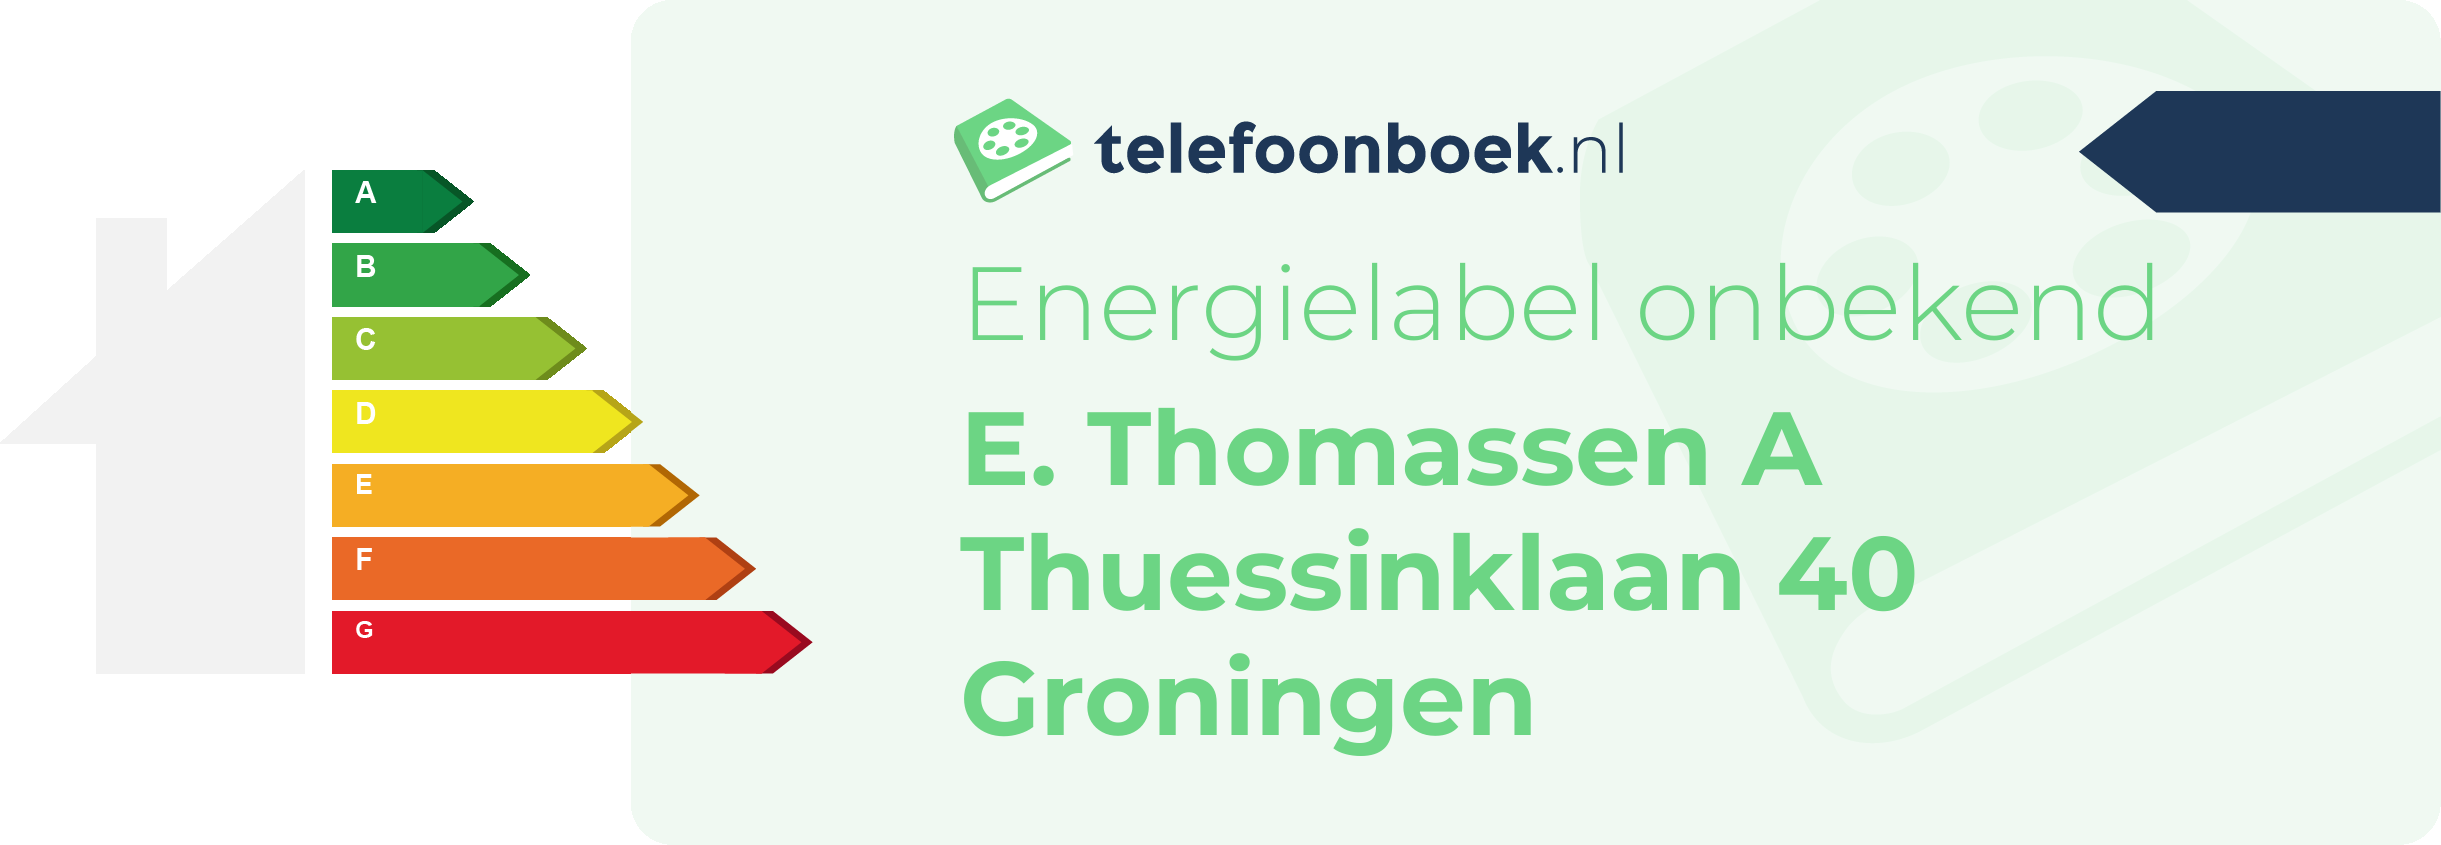 Energielabel E. Thomassen A Thuessinklaan 40 Groningen